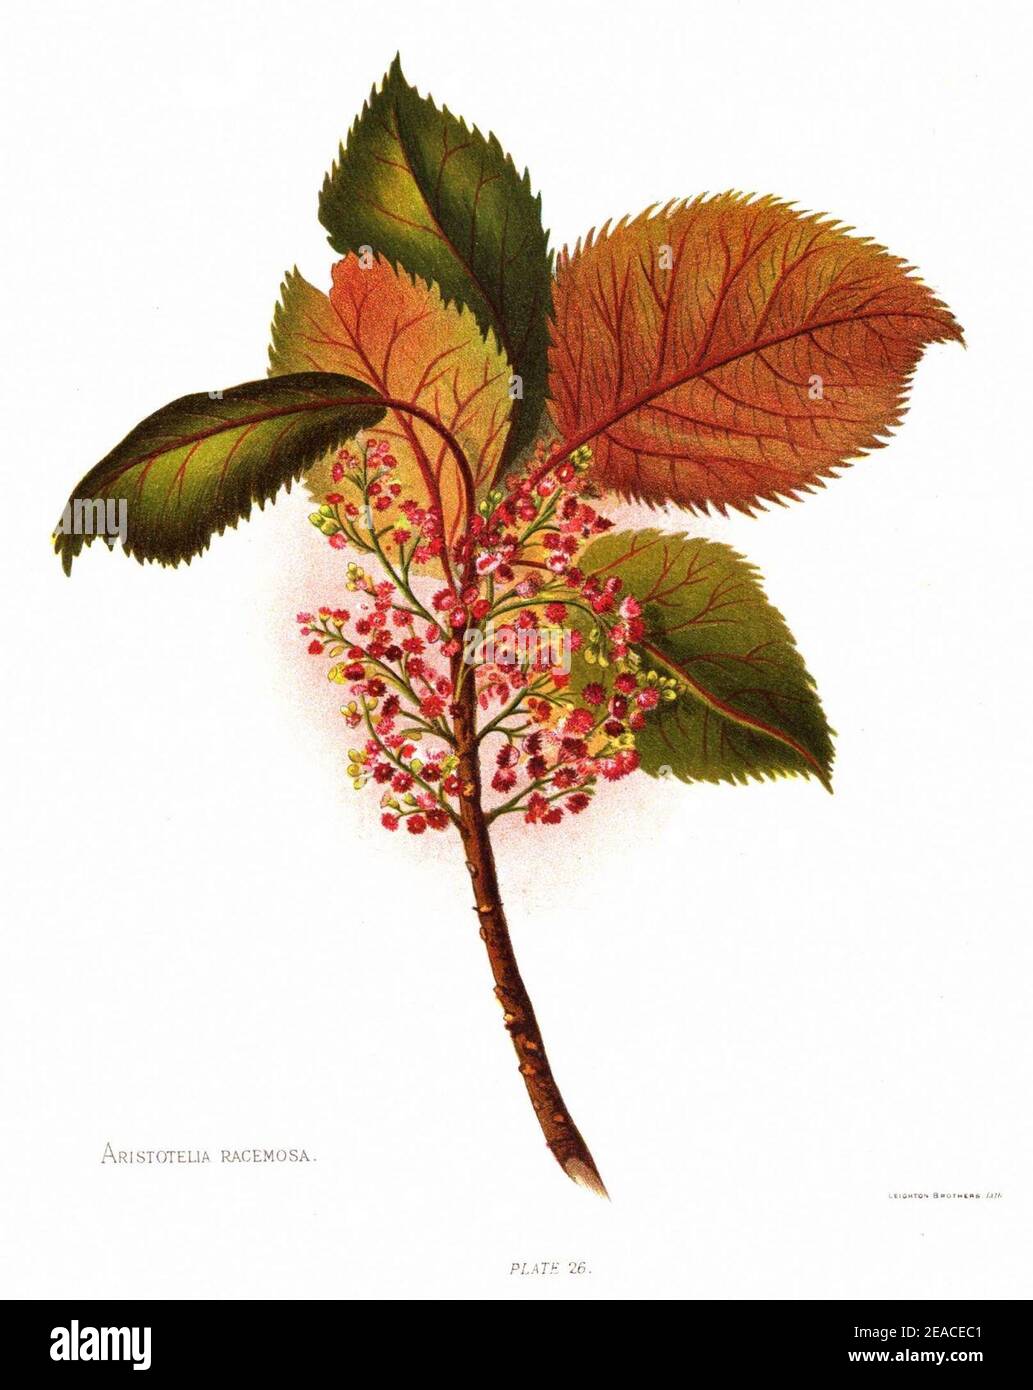 Nfnz d170 aristotelia racemosa. Stock Photo